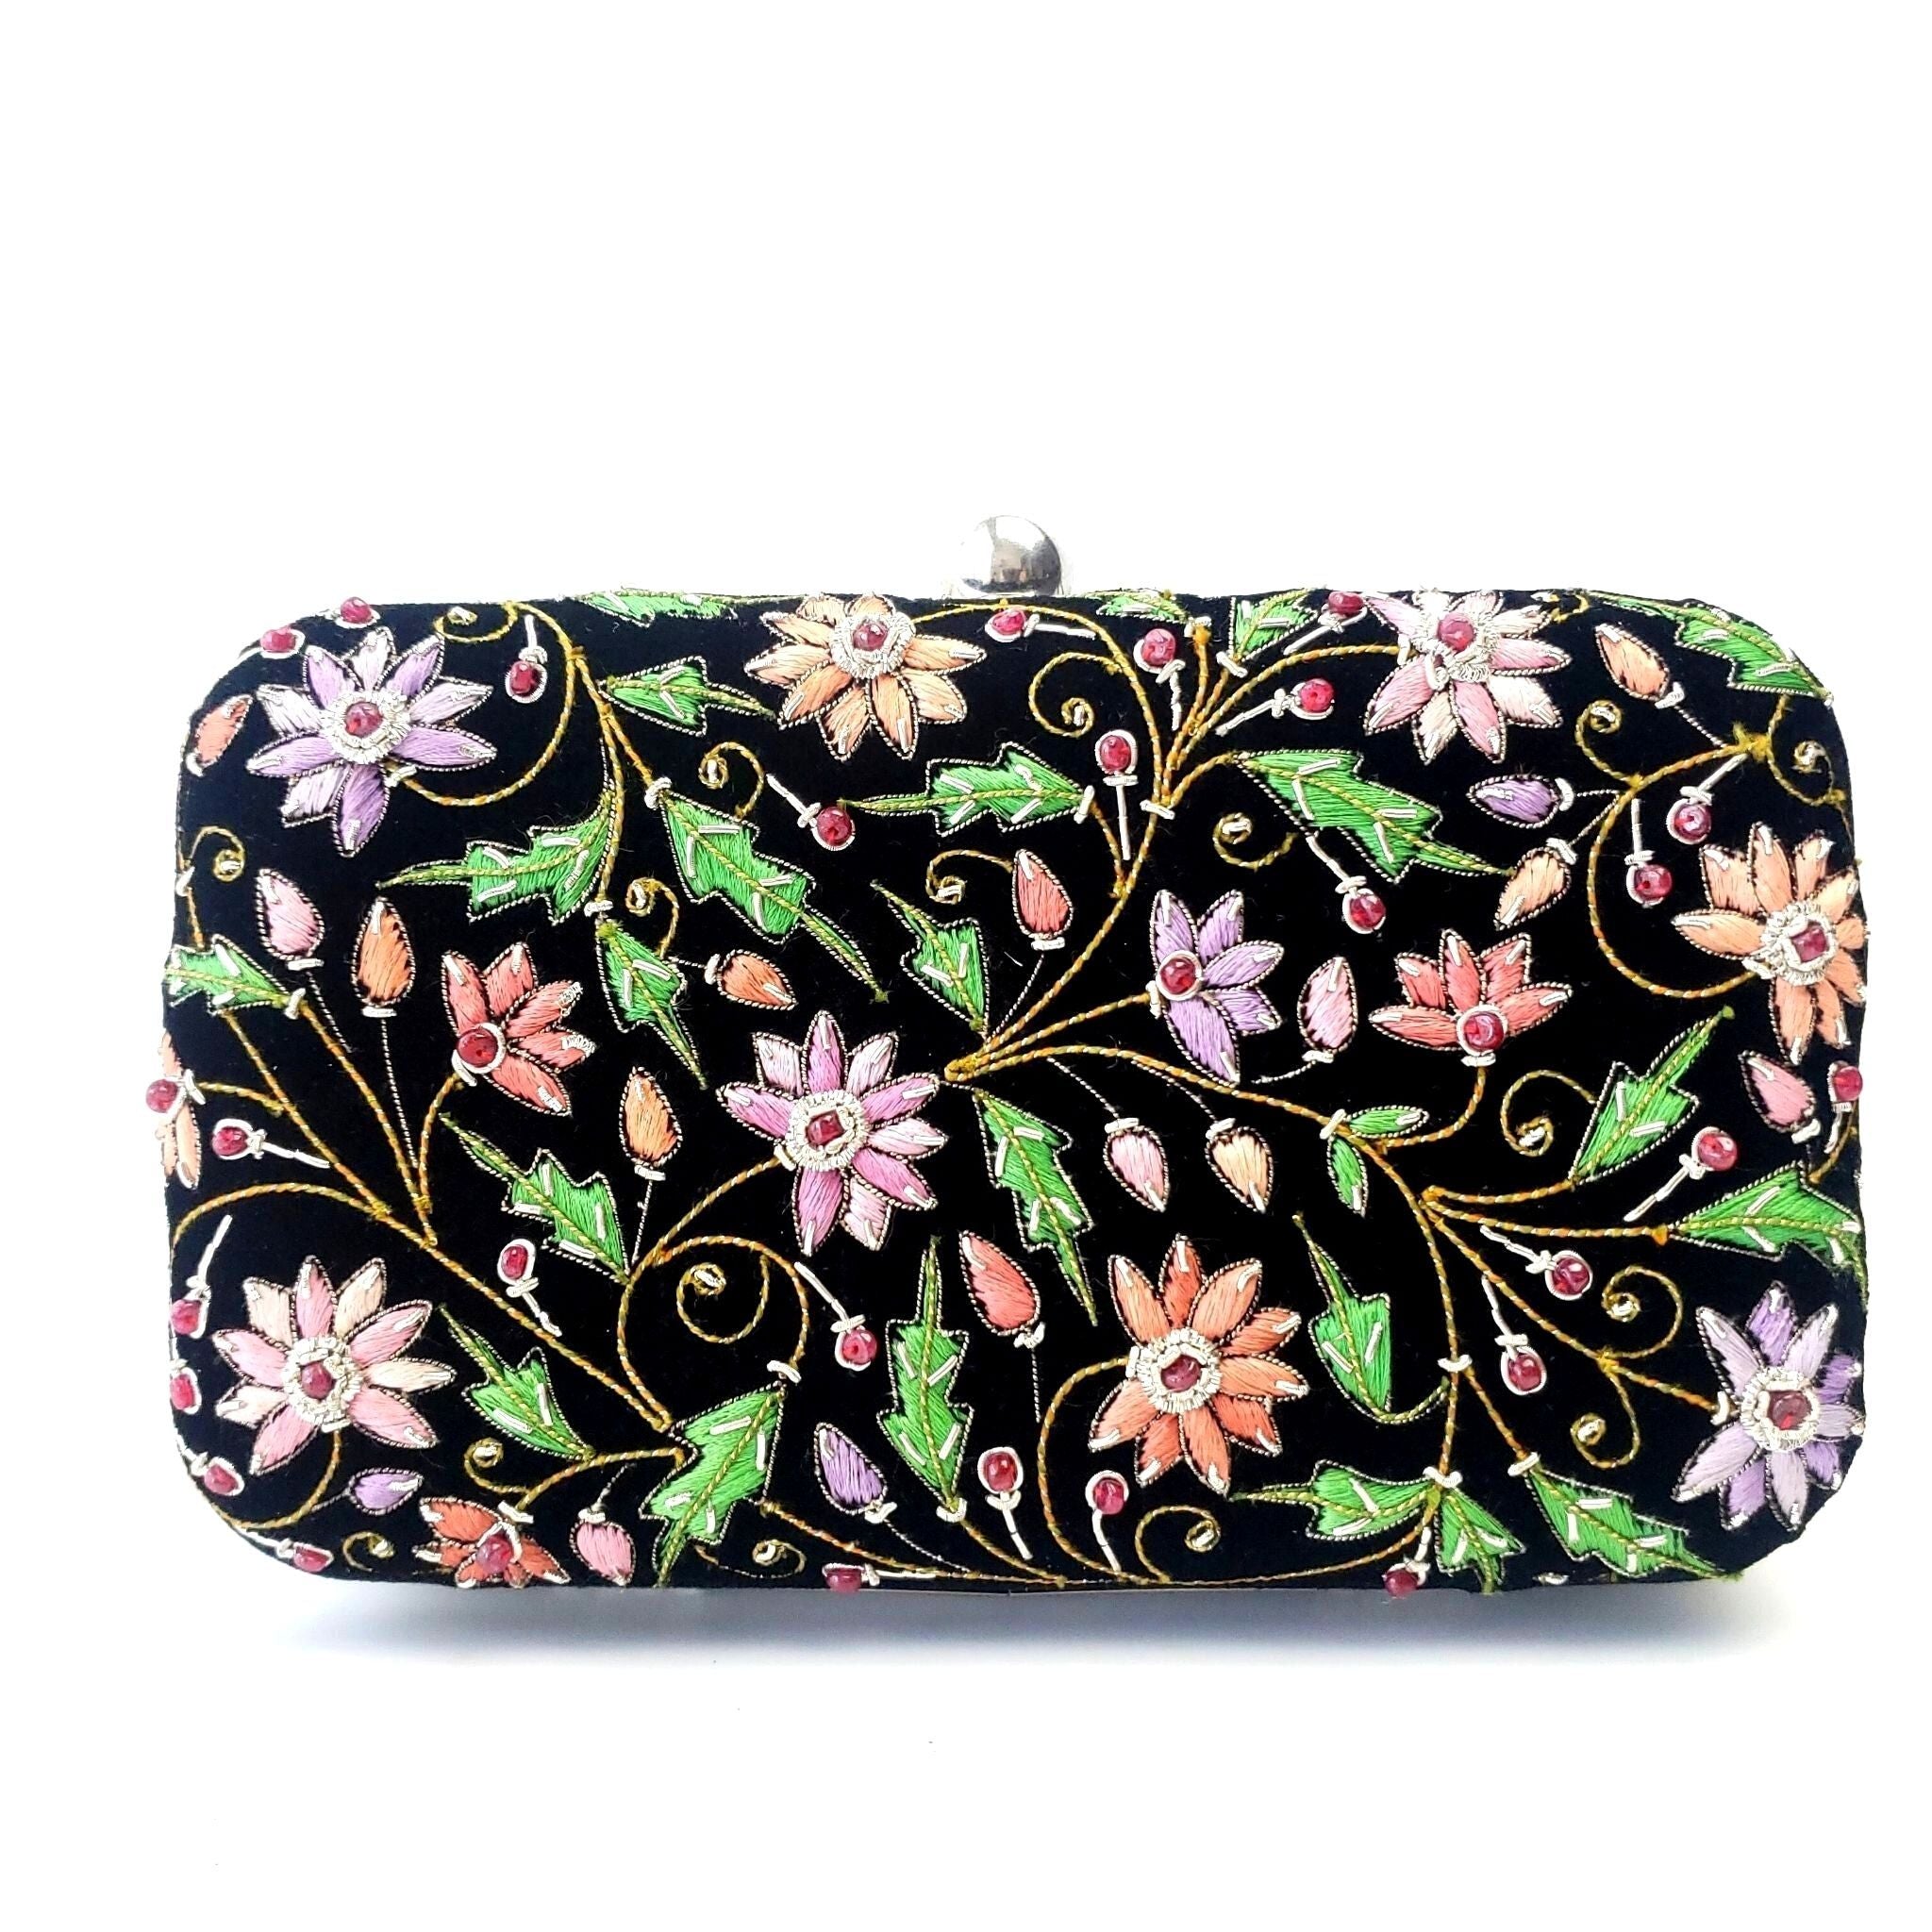 Wooden clutch bag frame purse frame| Alibaba.com